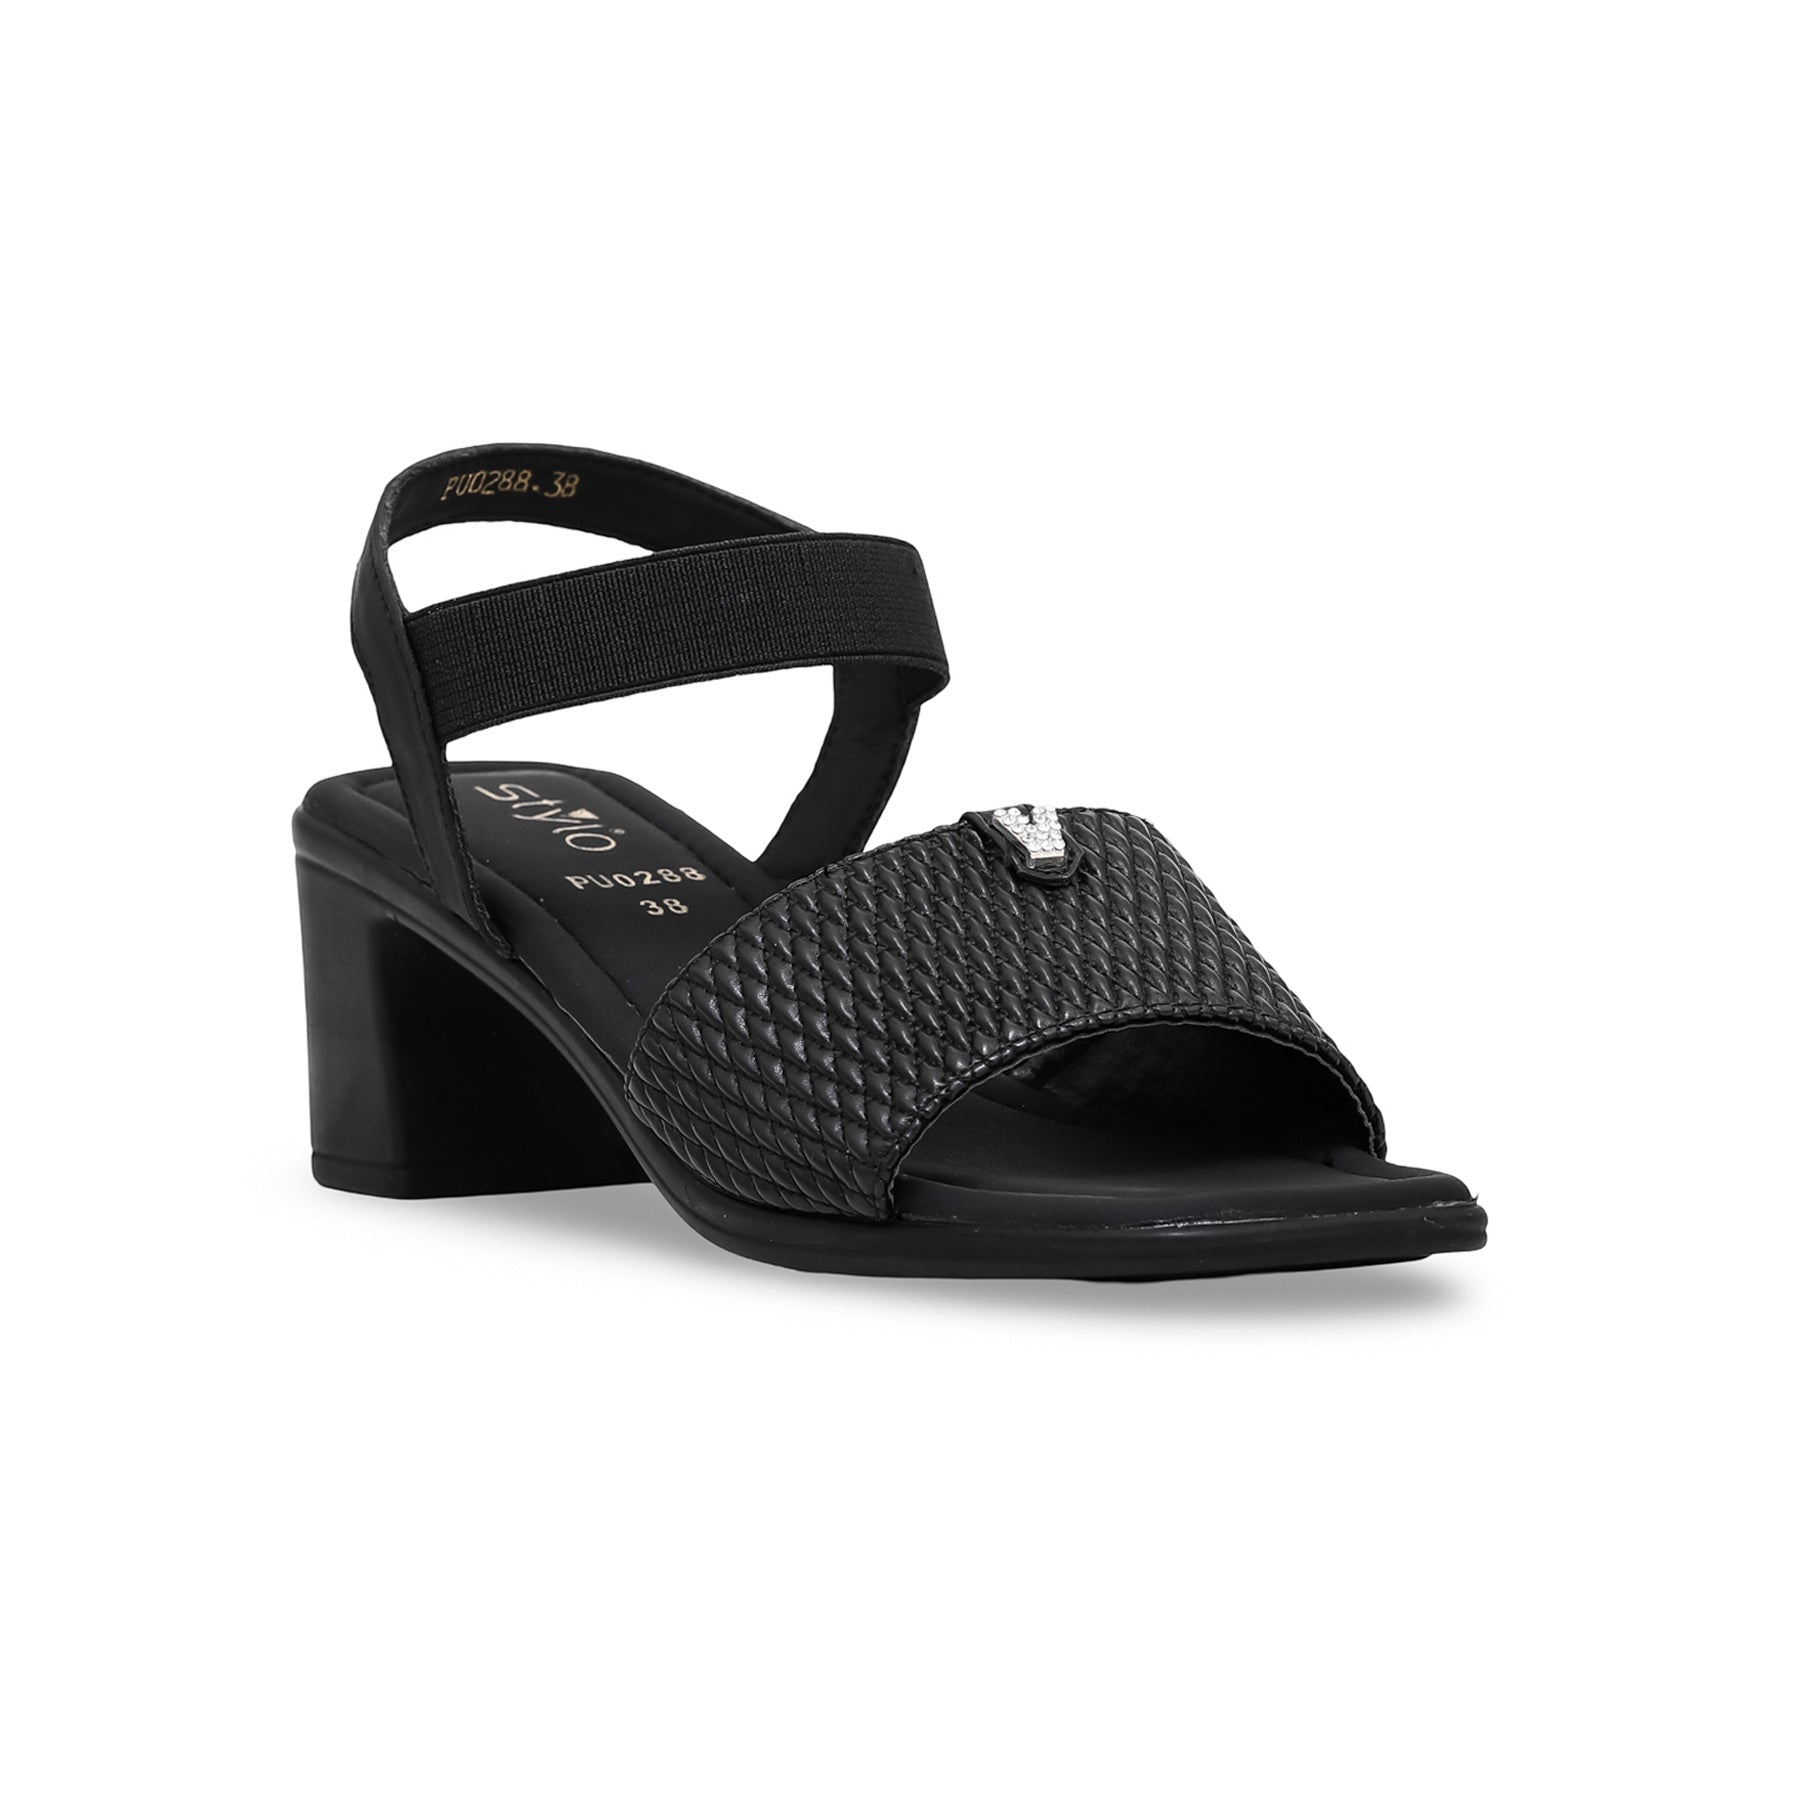 Black Formal Sandal PU0288